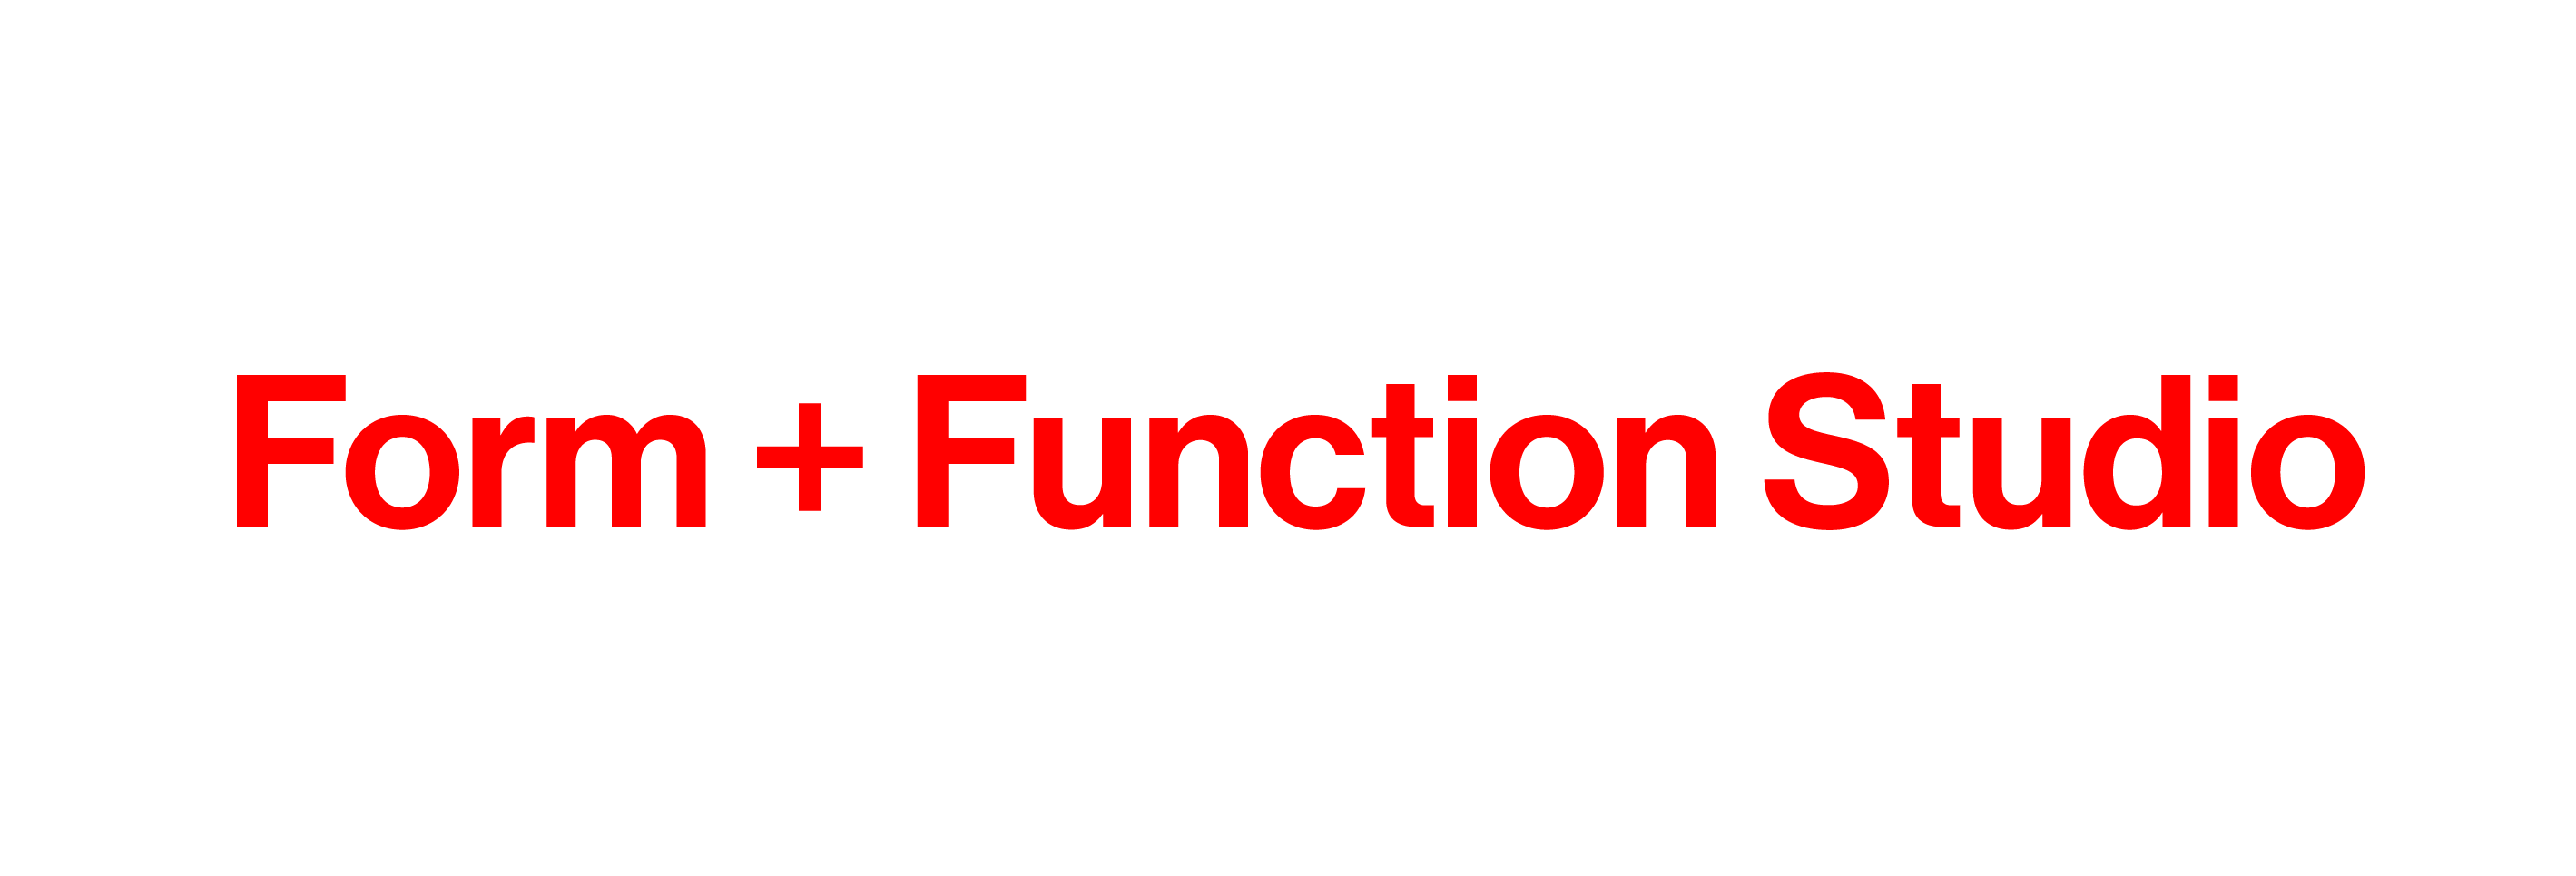 Form + Function Studio